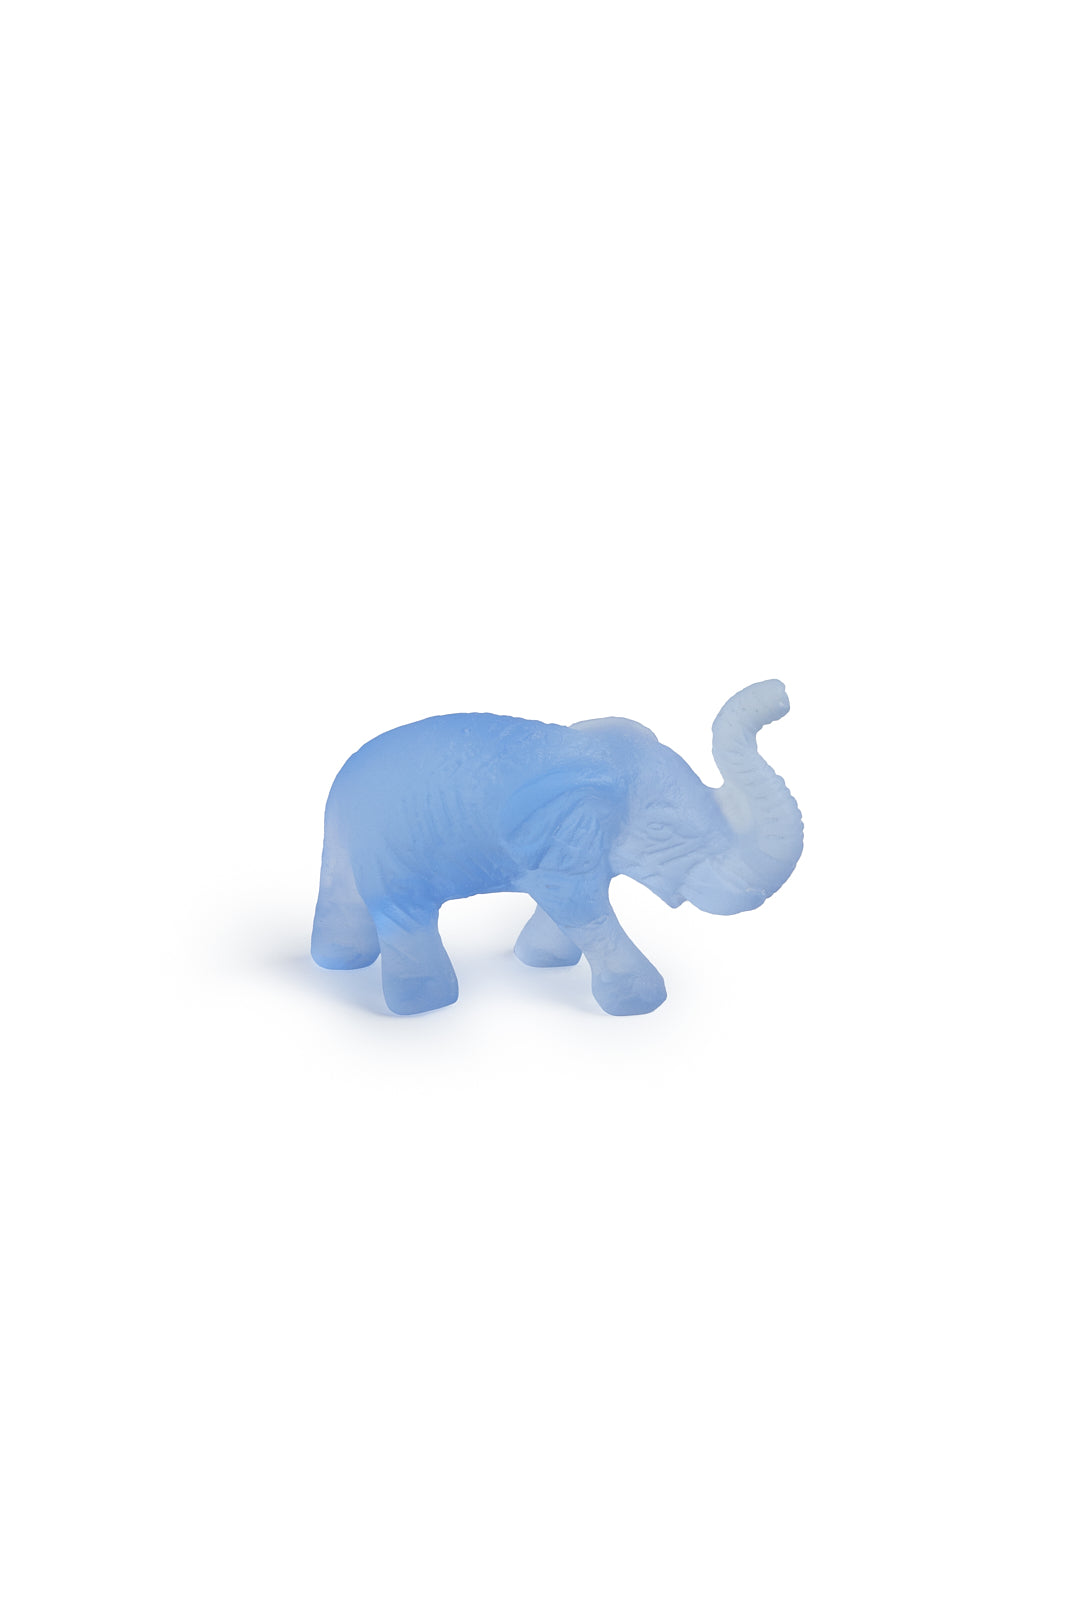 Glass Object Elephant